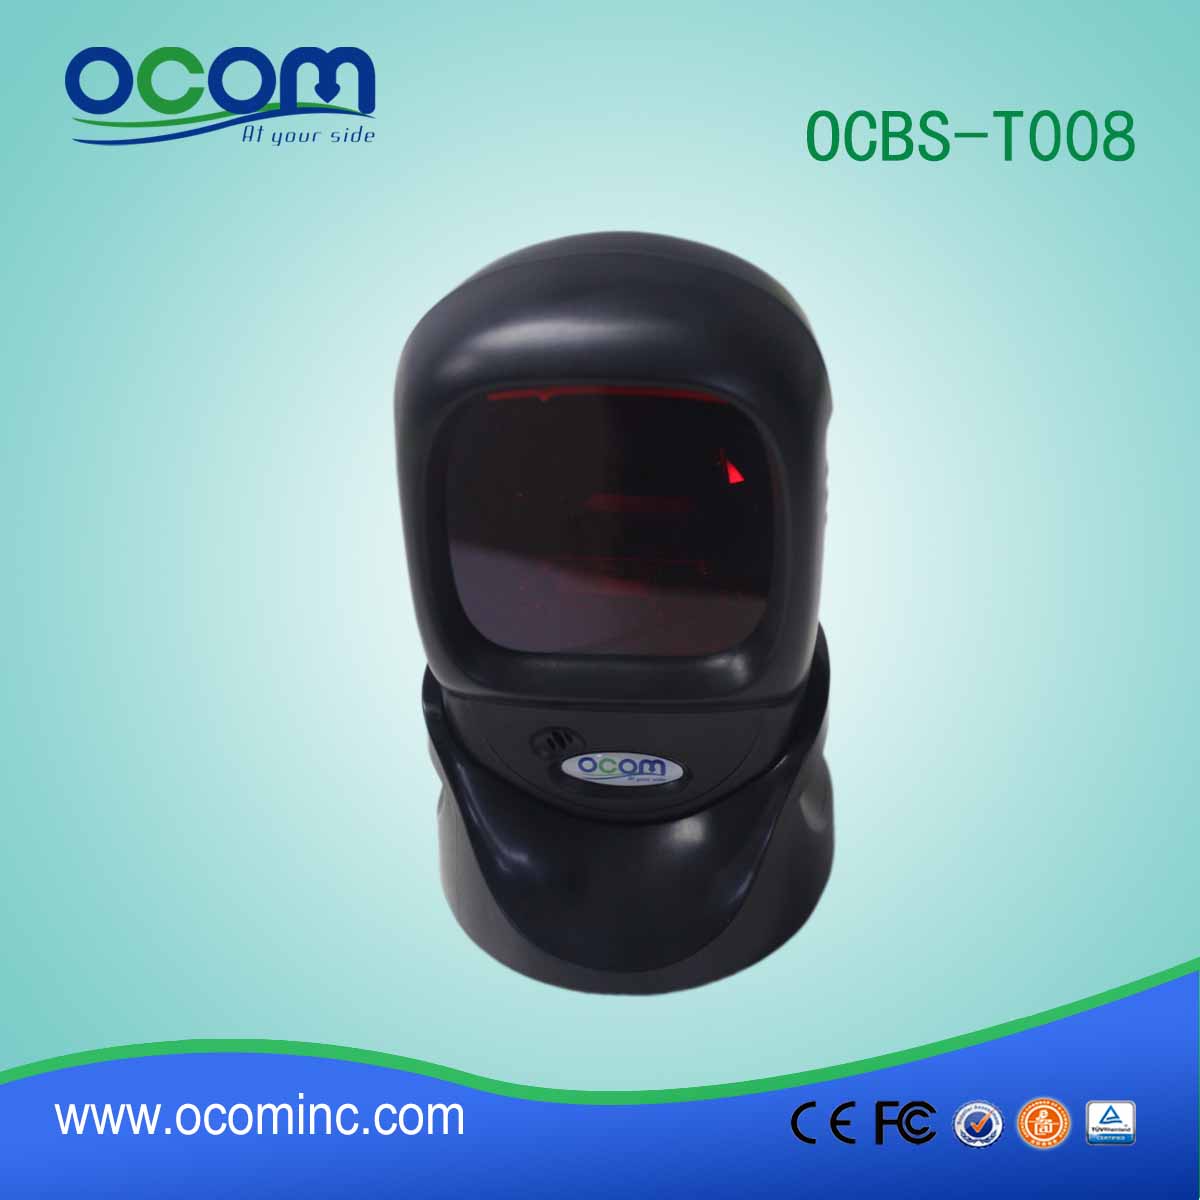 OCBs-T008 Supermercado Omini Cash Register Barcode Scanner POS